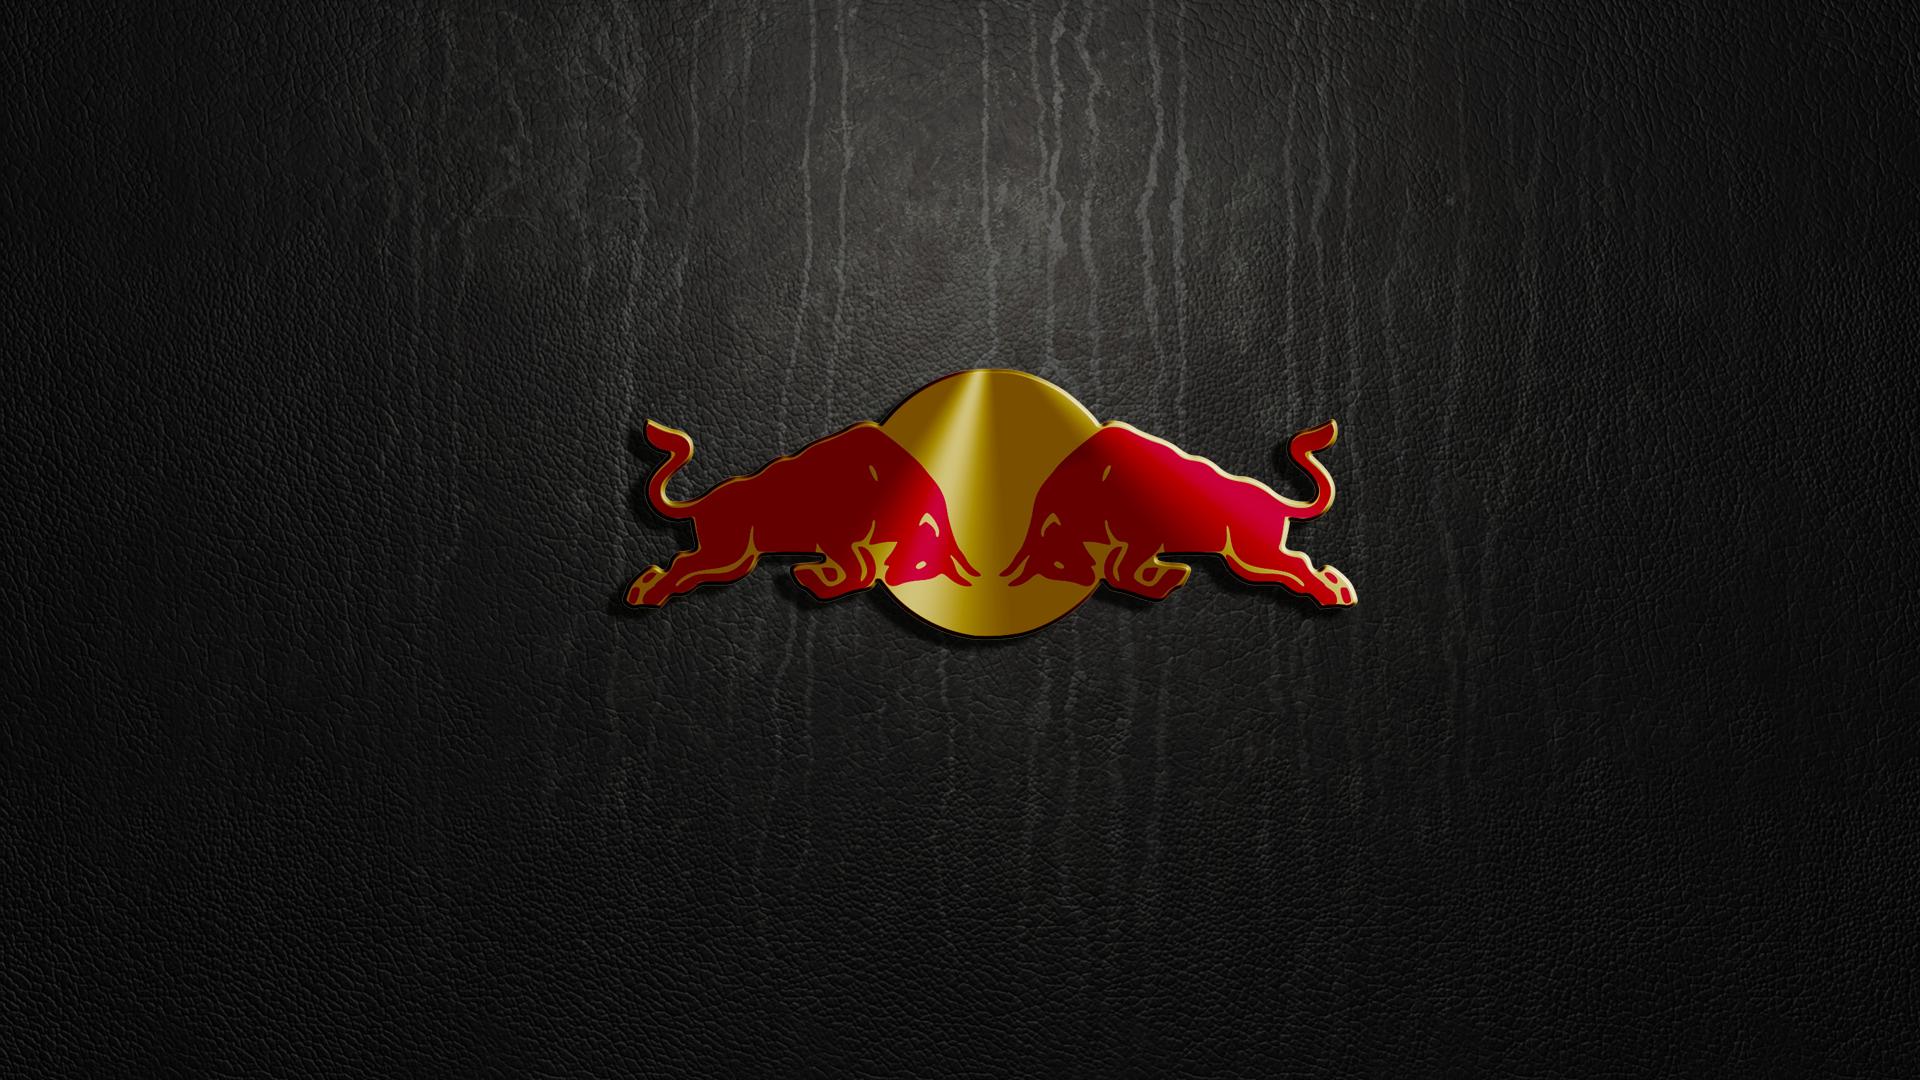 Red Bull i Good Looking Studio - Branding wymalowany na trawie Red Bull 8Vcu17L